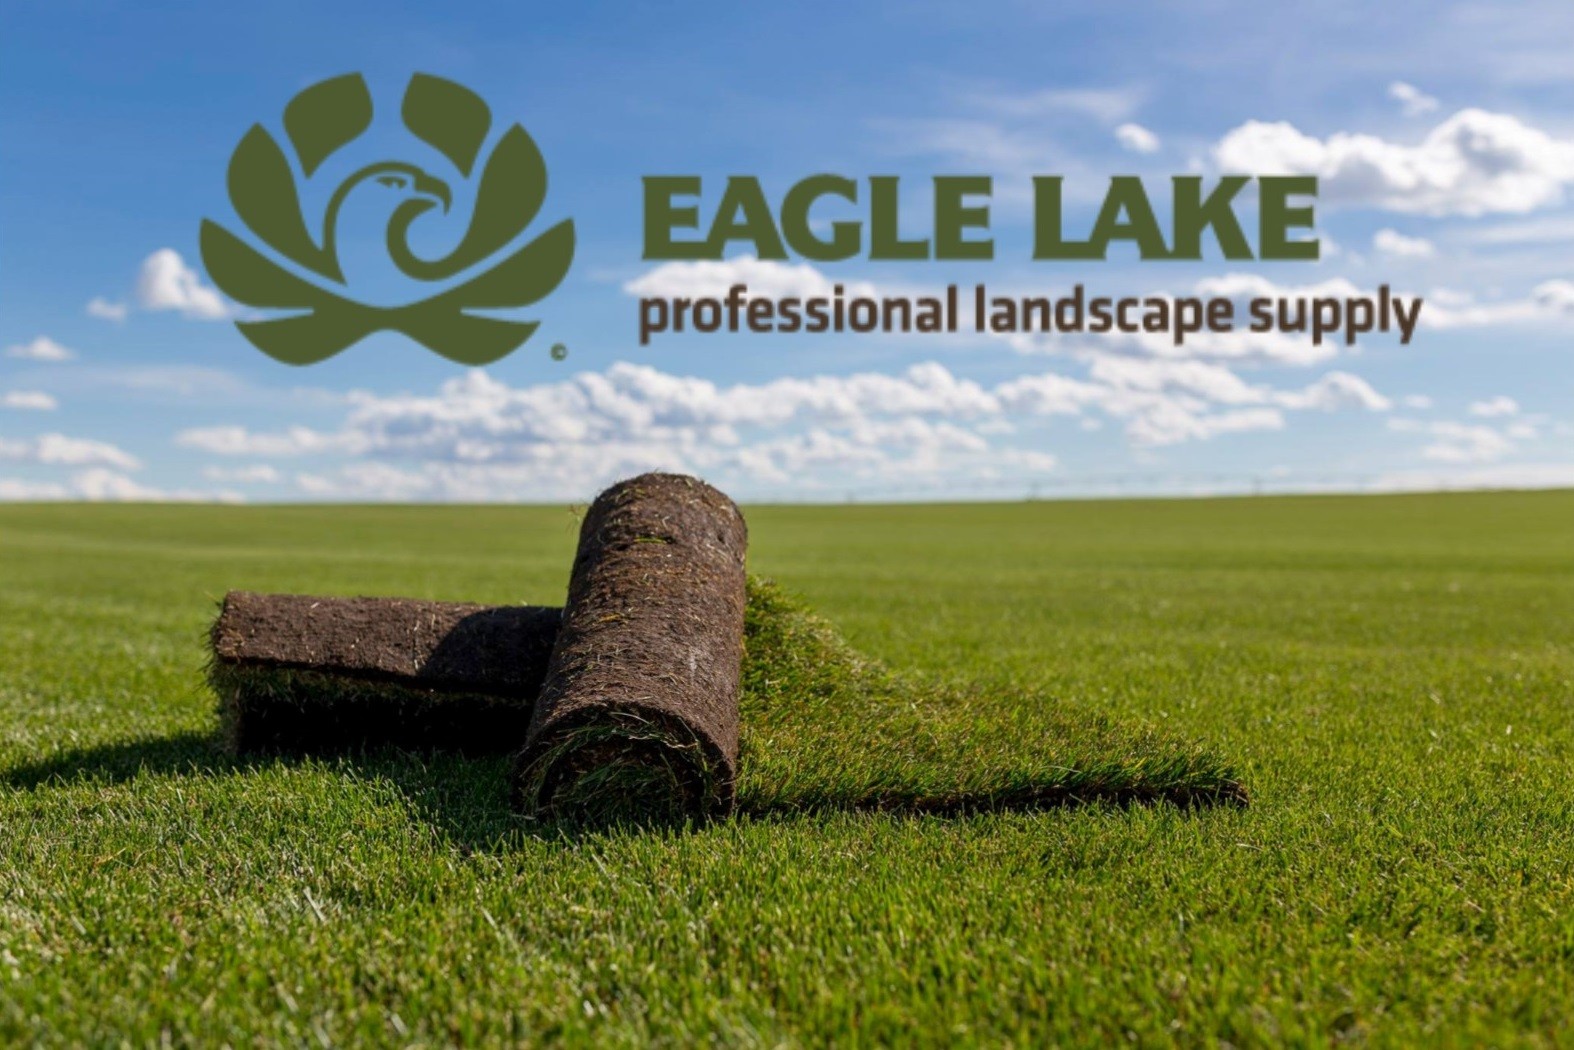 Eagle Lake Professional Landscape, Eagle Landscape Supply